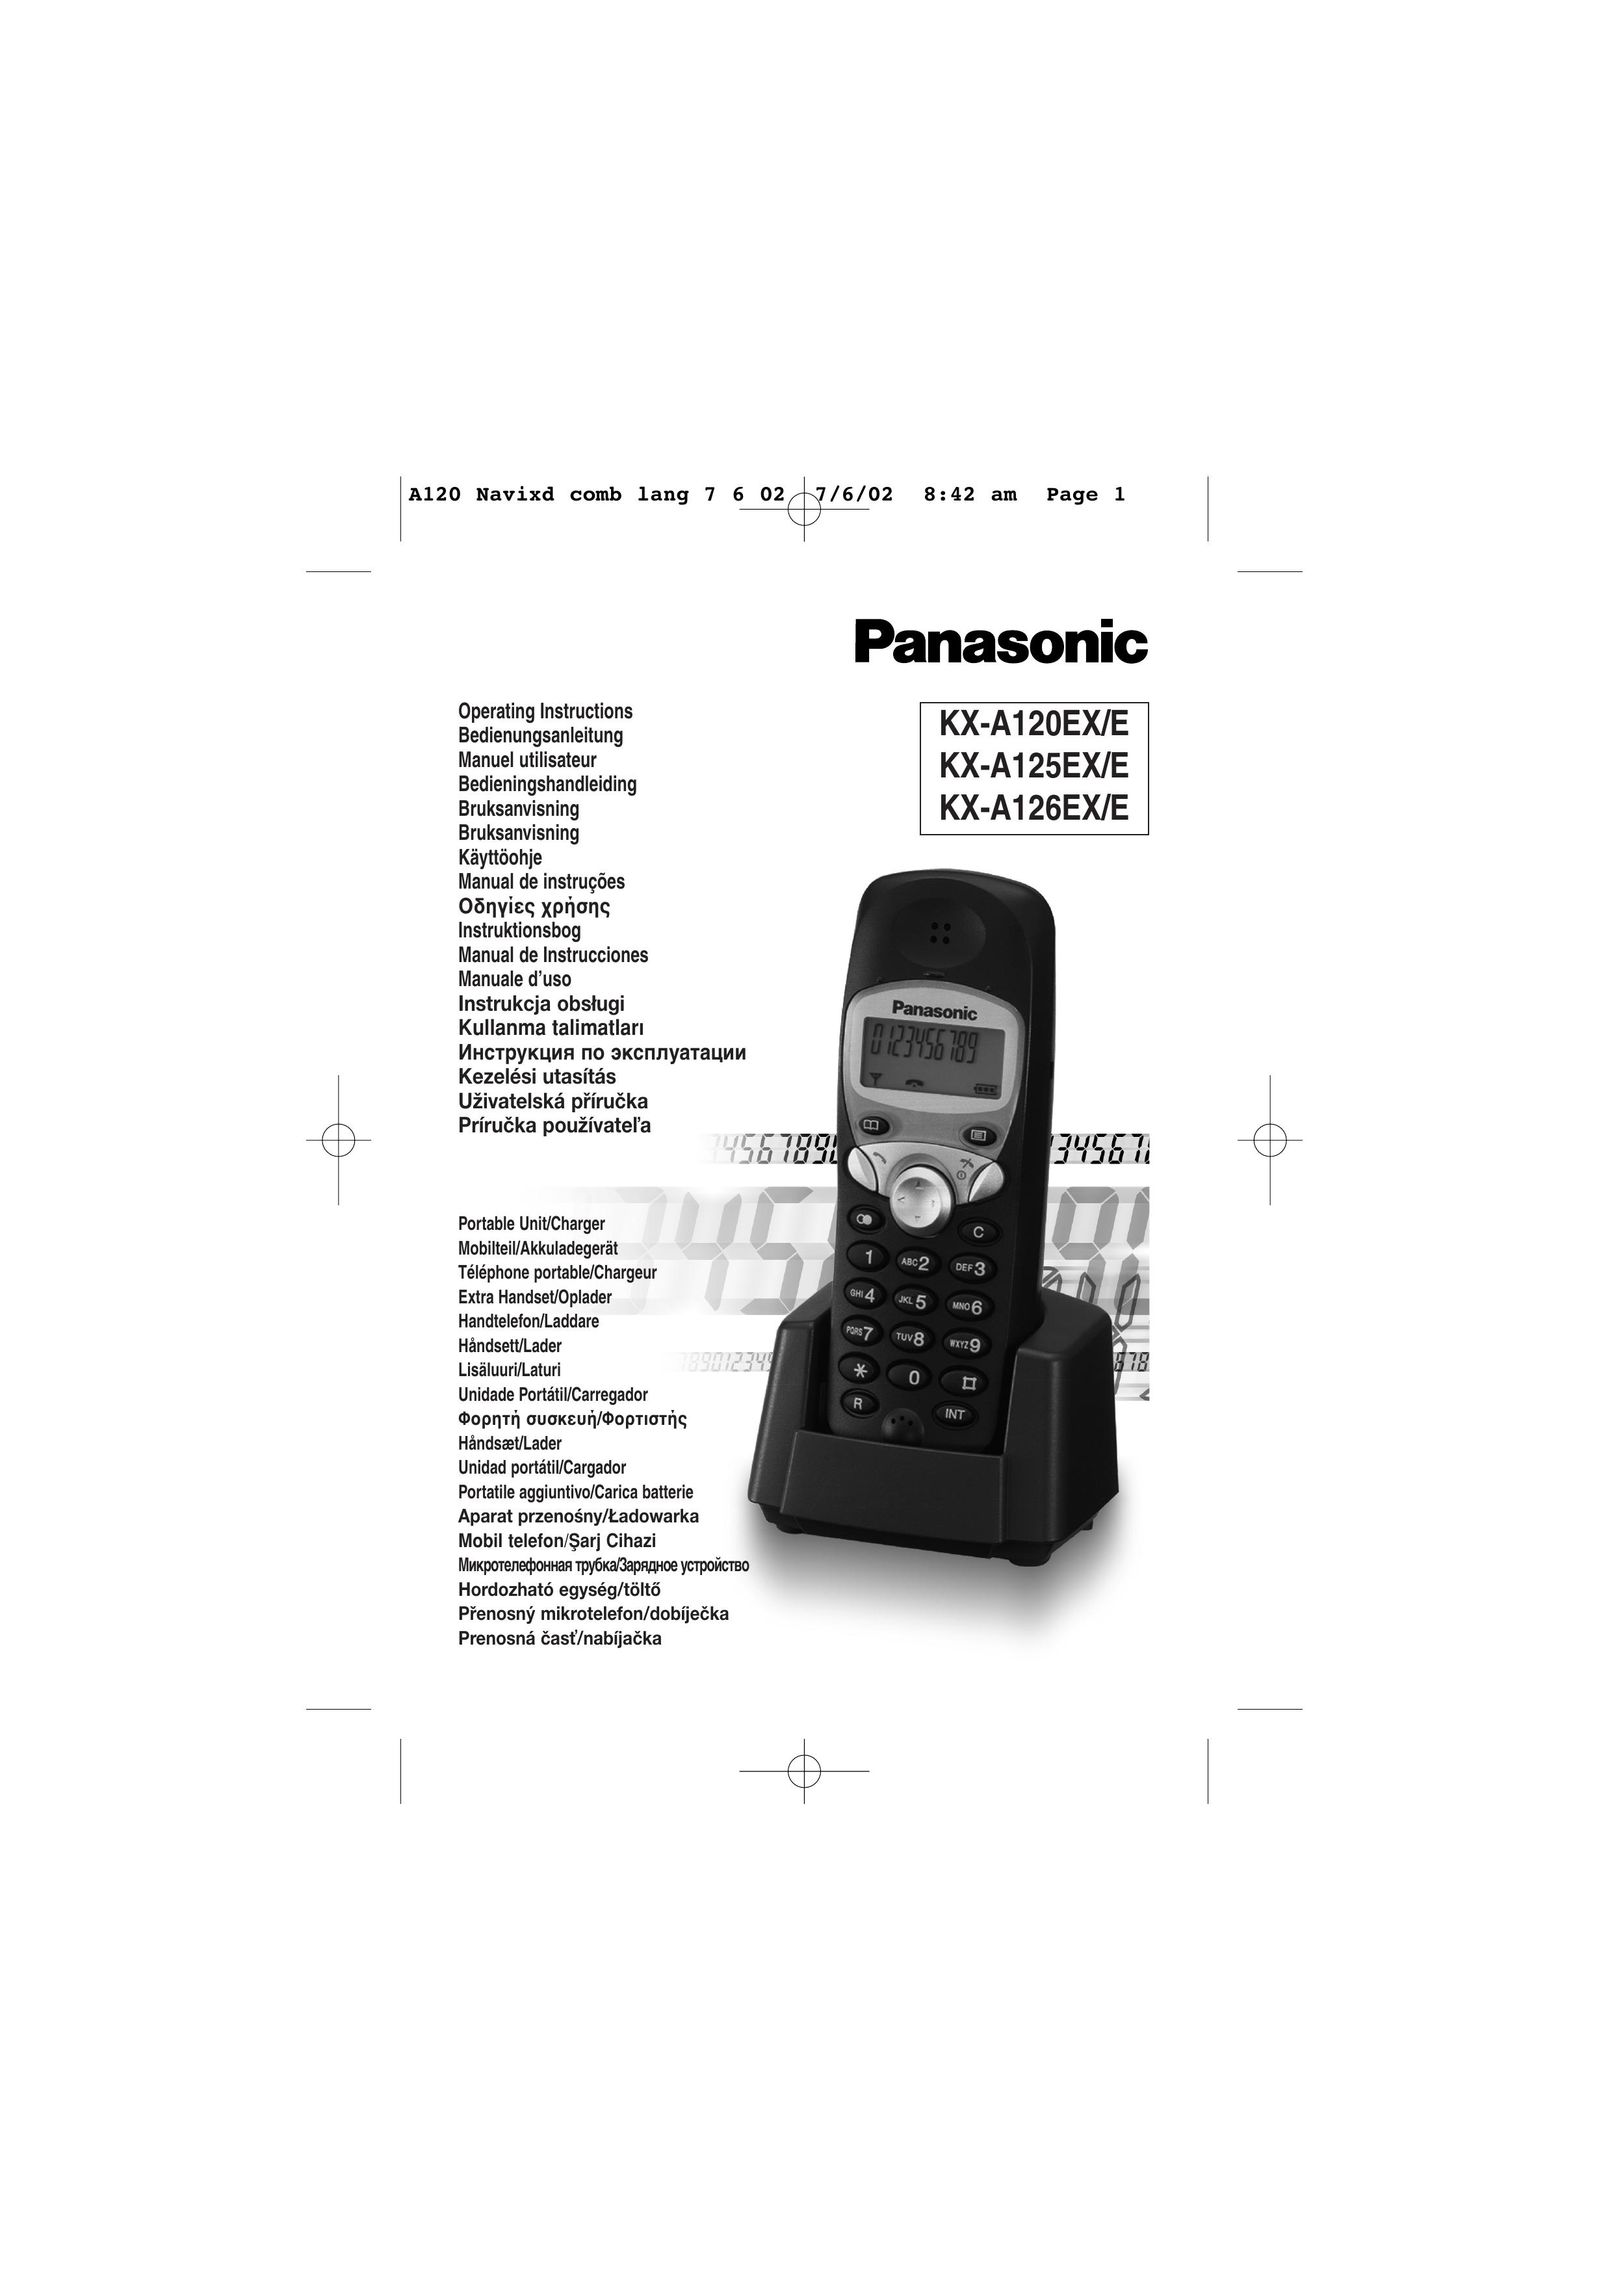 Panasonic KX-A126EX/E Telephone User Manual